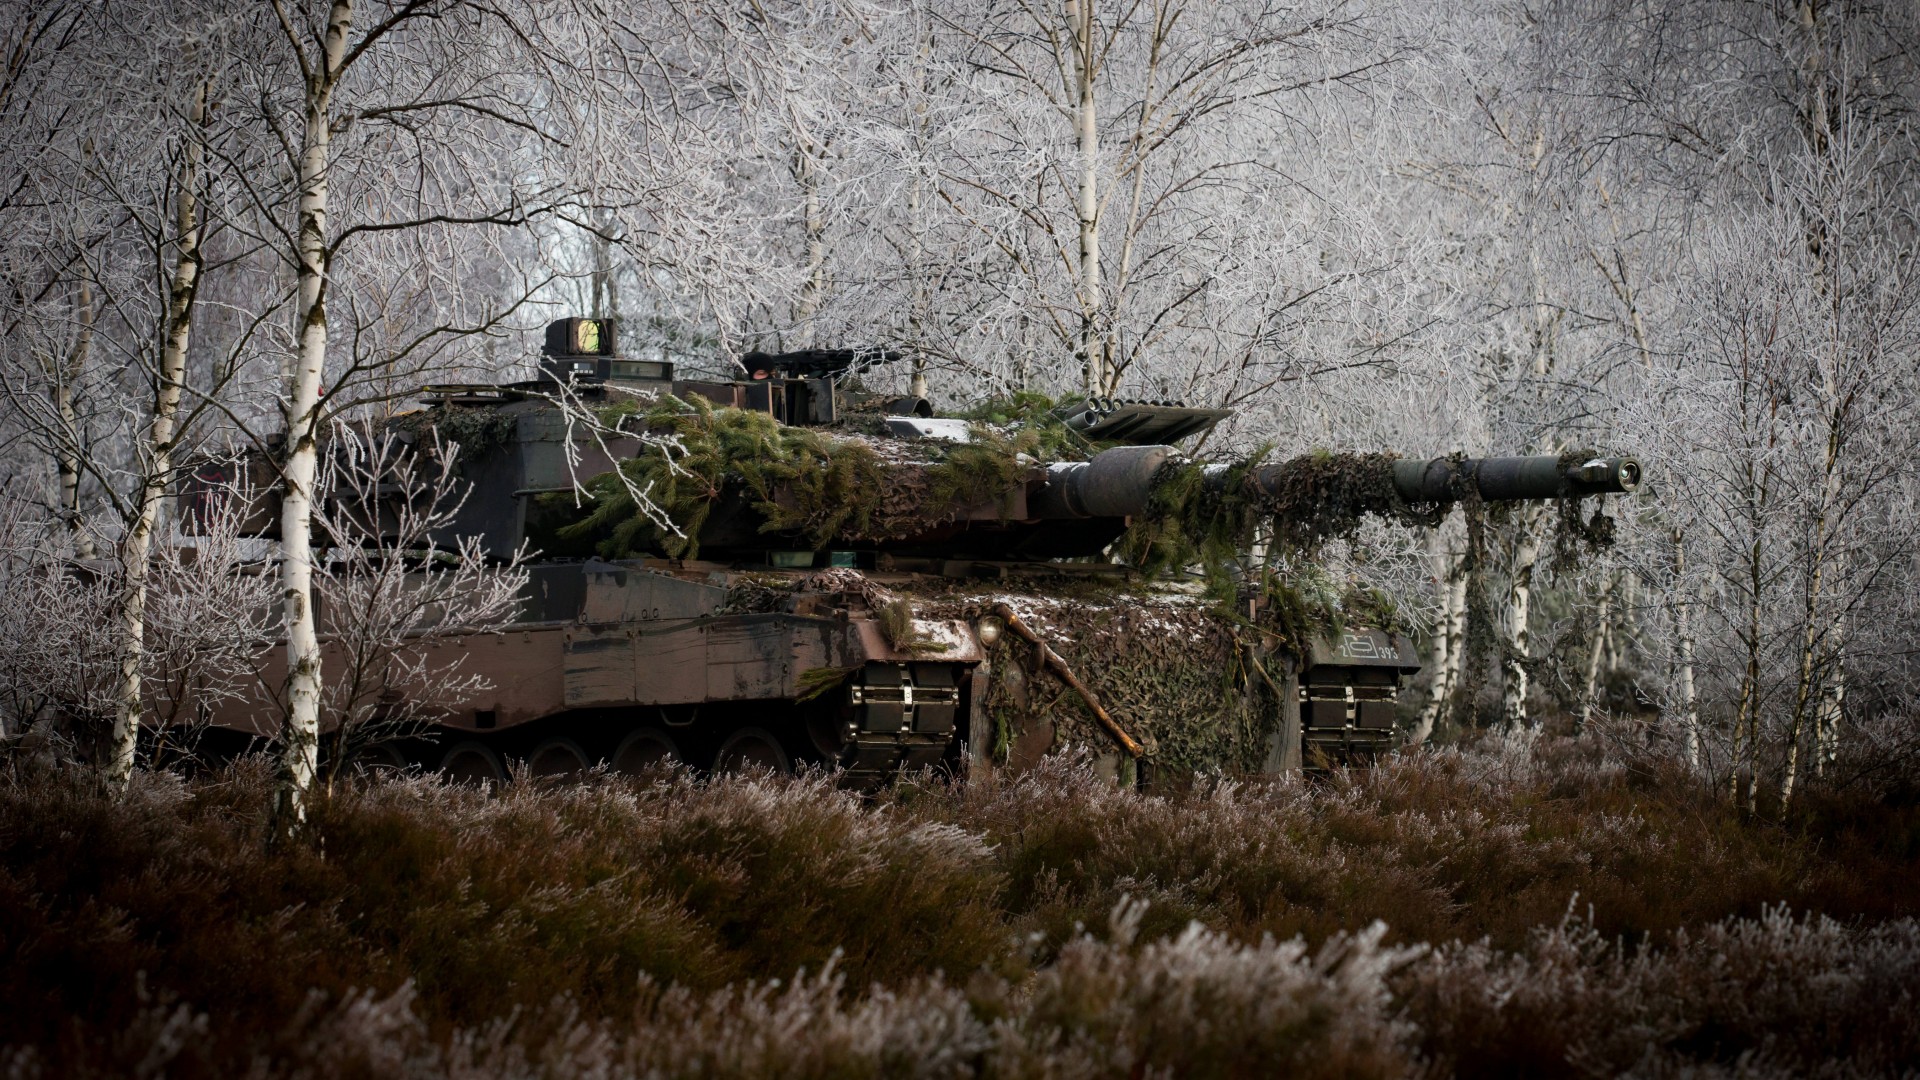 Leopard 2, 2a6m, Can, MBT, tank, German, forest, Bundeswehr, camo, winter (horizontal)